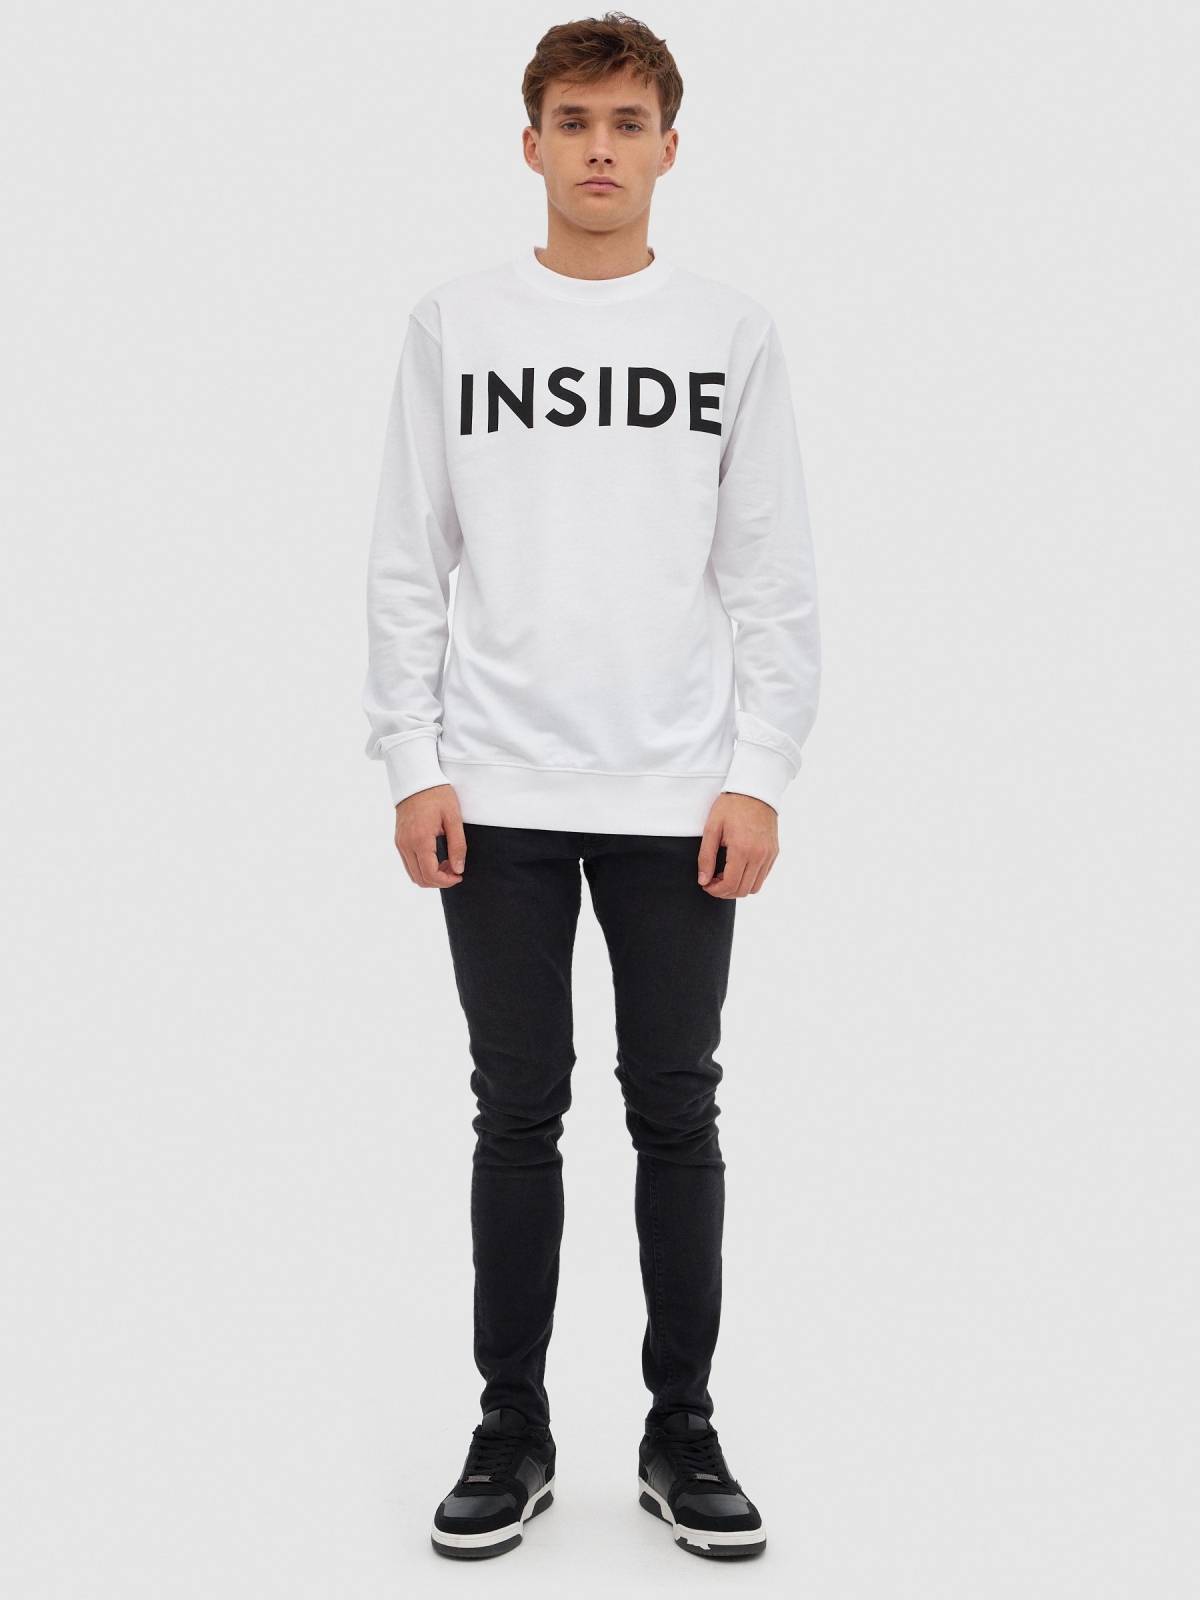 INSIDE hoodless sweatshirt white front view